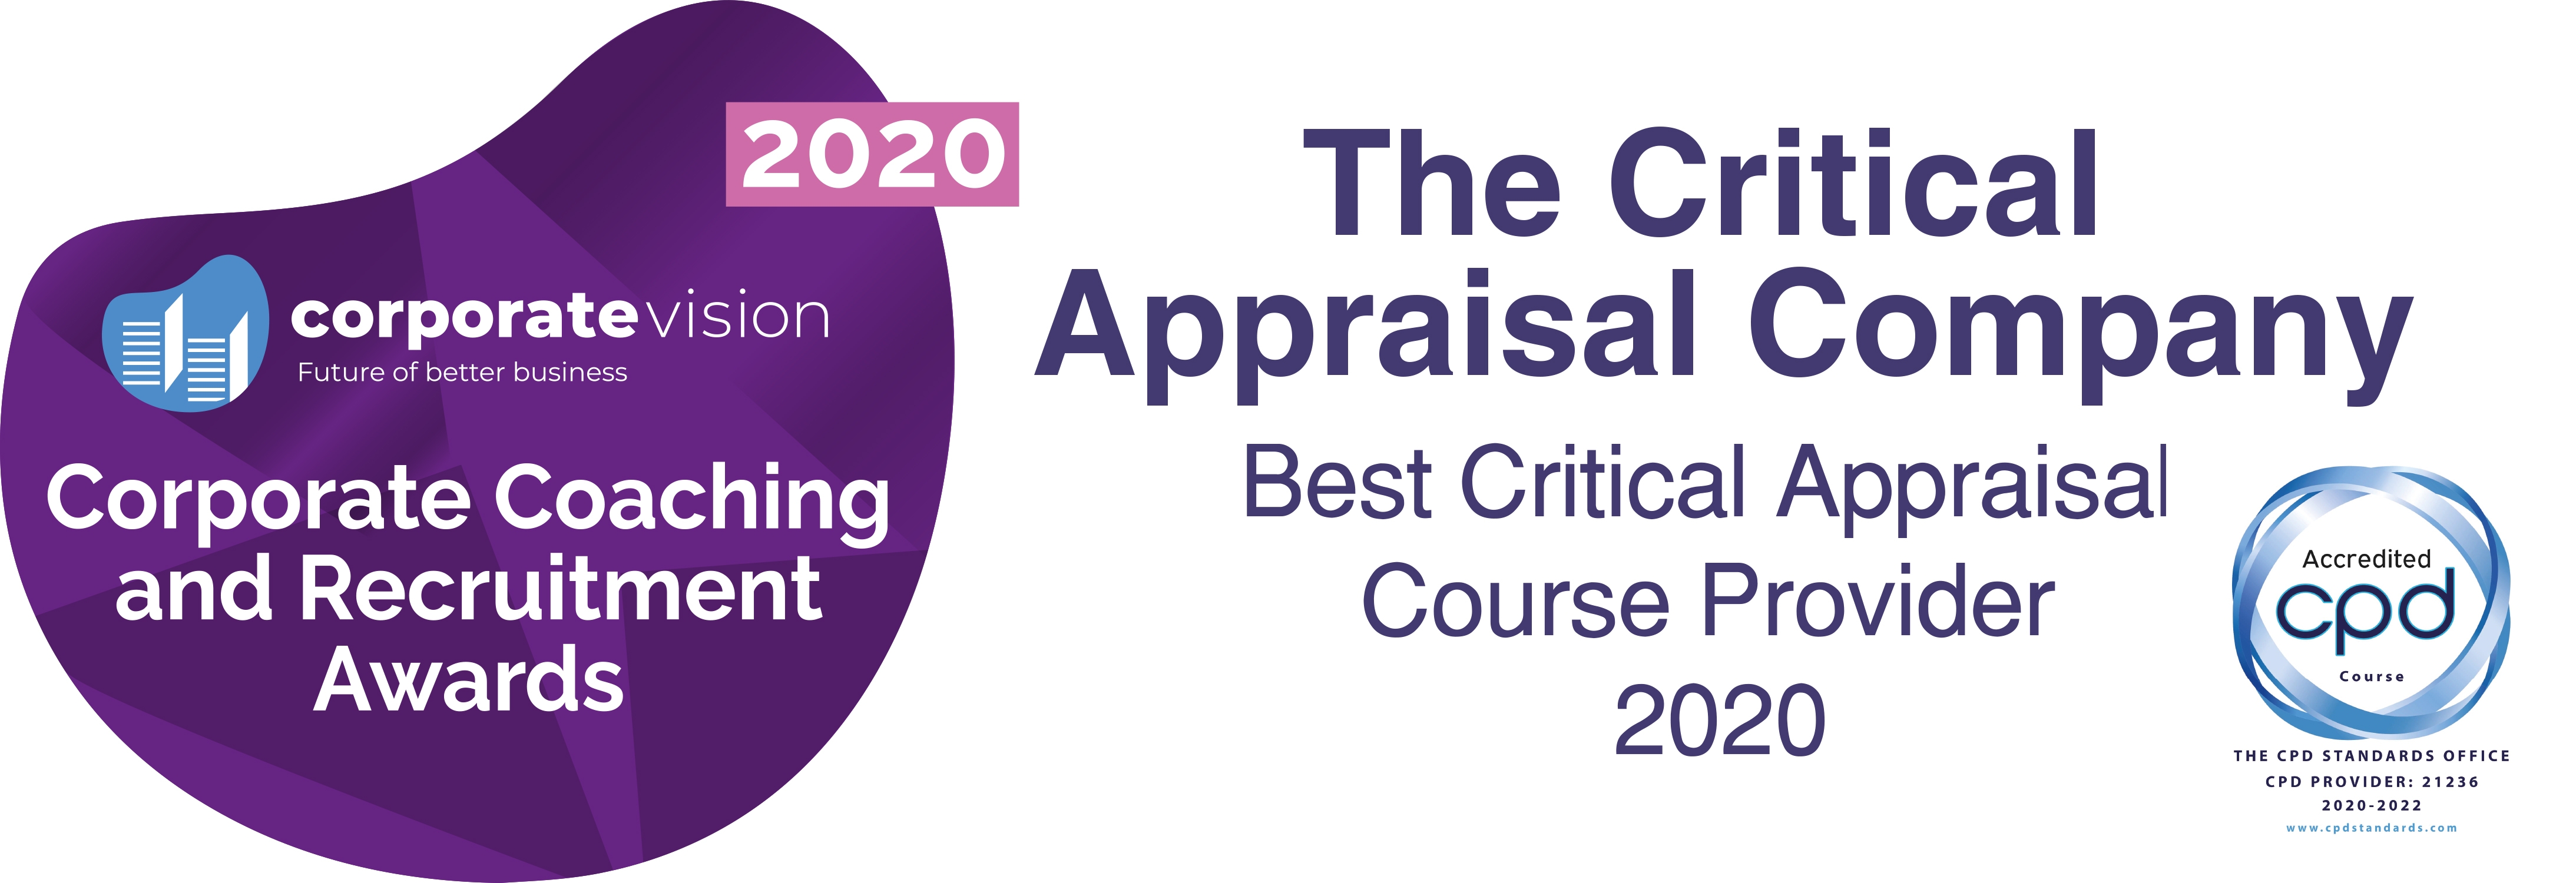 Best Critical Appraisal Course Provider 2020